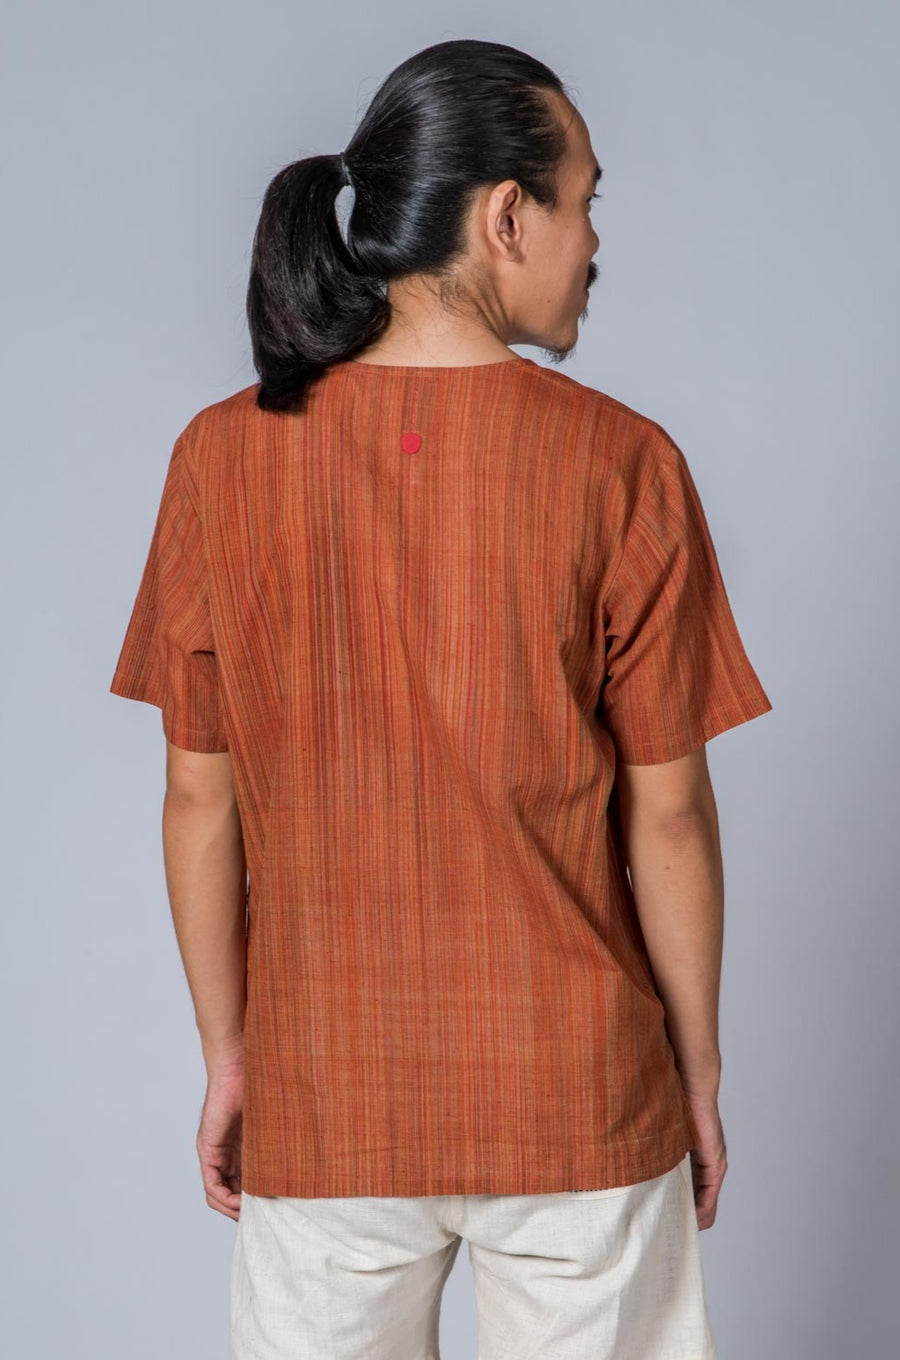 Striped Brick Red Handwoven Shirt - TYLER - Upasana Design Studio